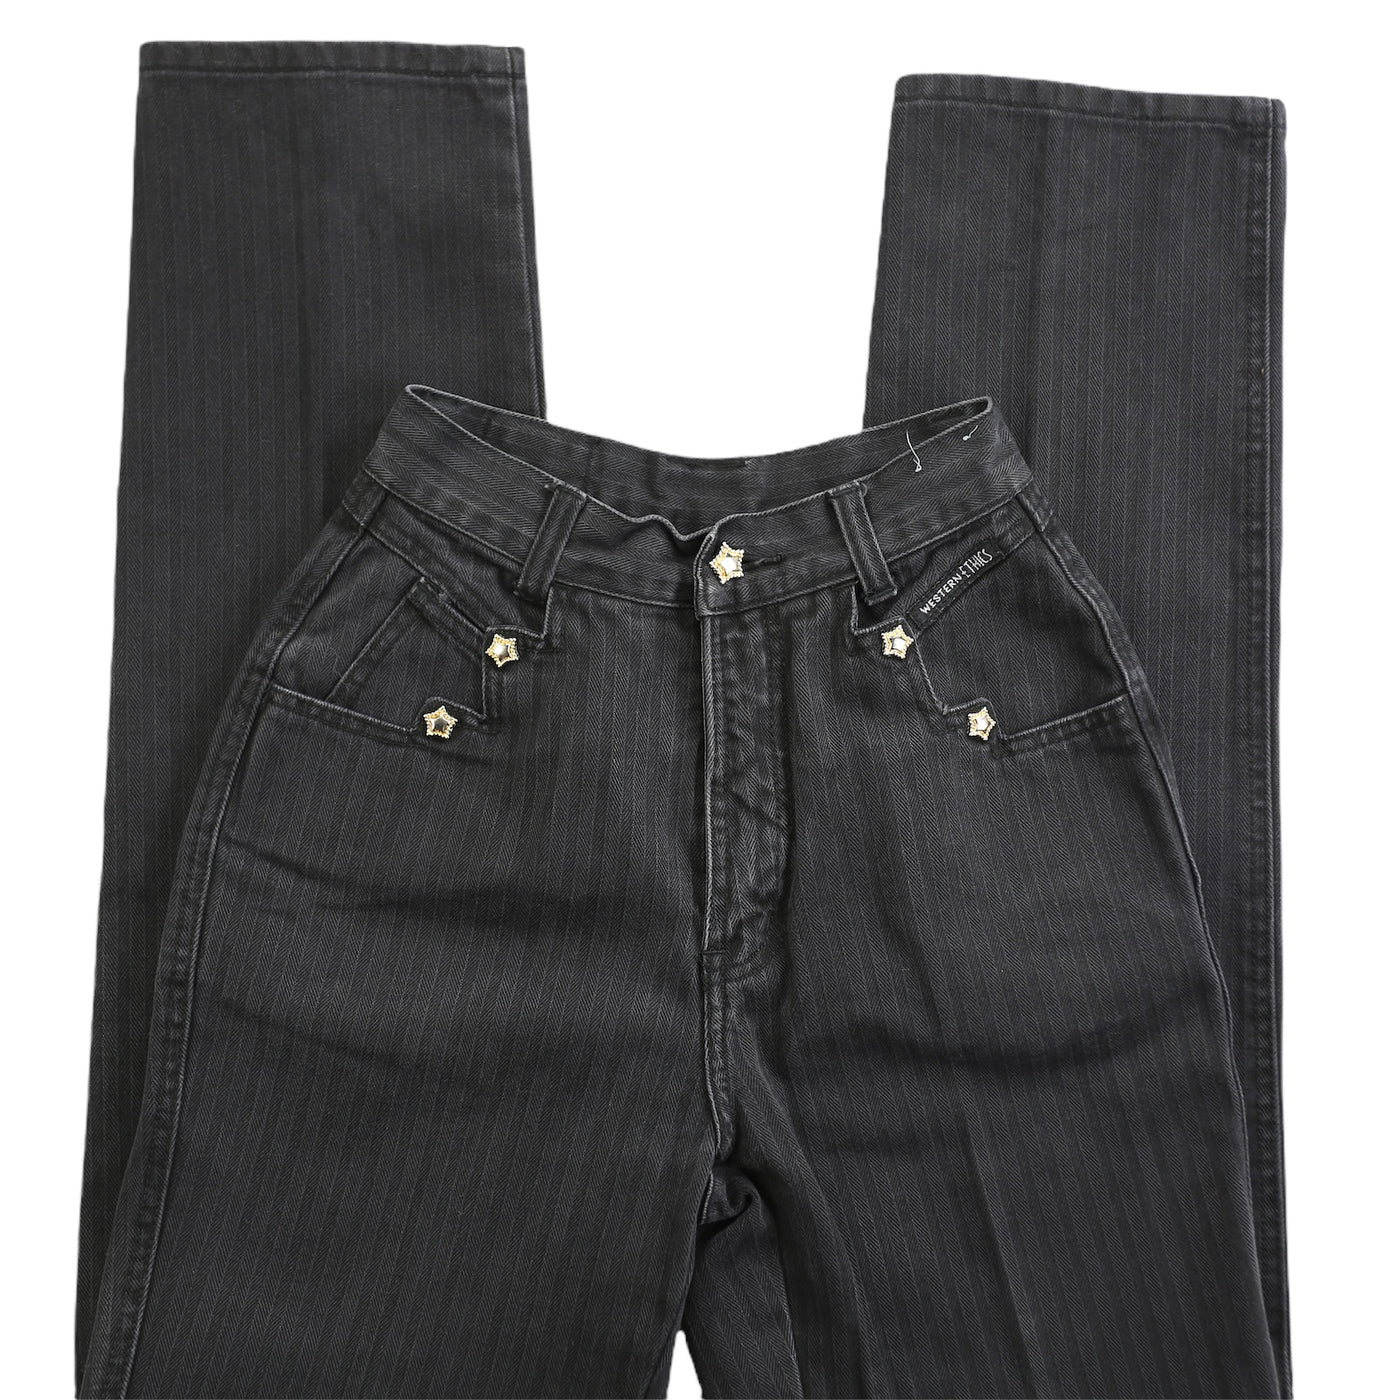 Vintage Western Ethics Black Star Studded High Waisted Jeans 22"/23"